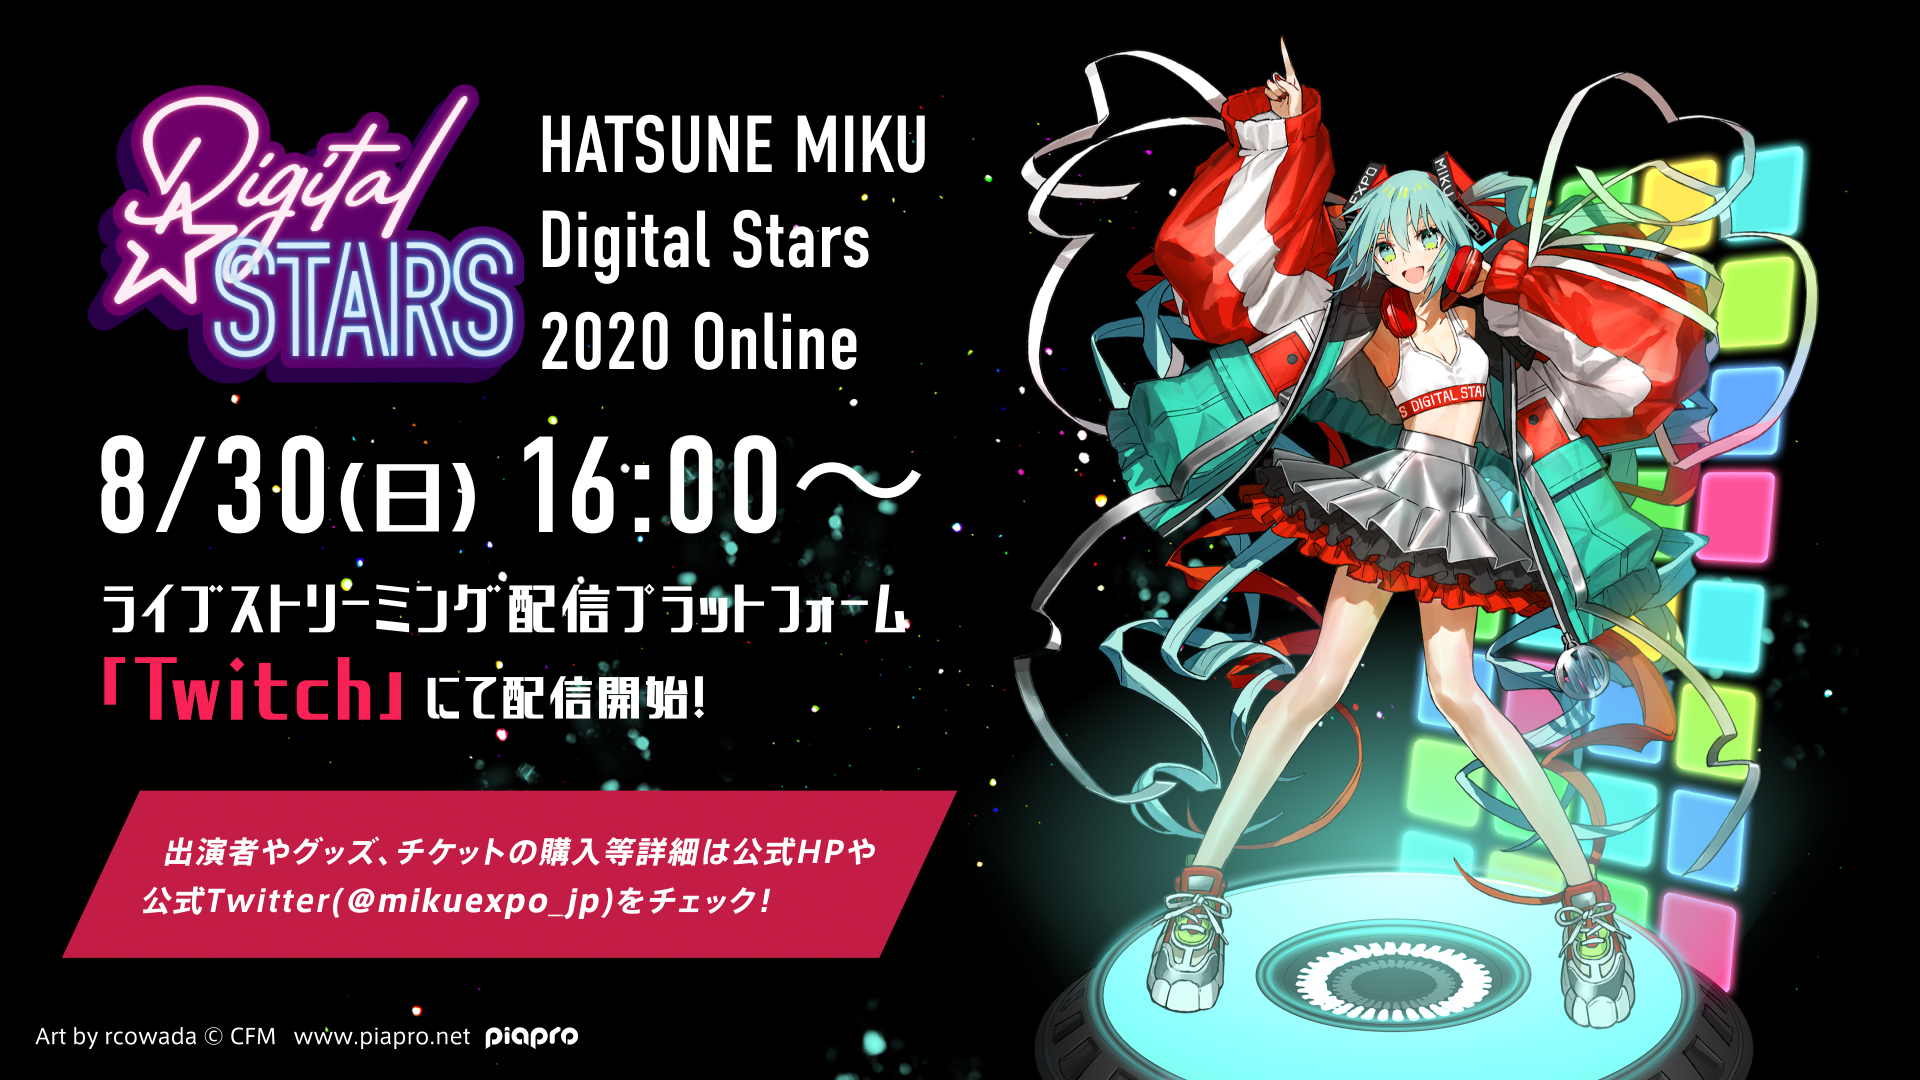 Hatsune Miku Birthday 2020 (1) - Digital Stars 2020 Online Information